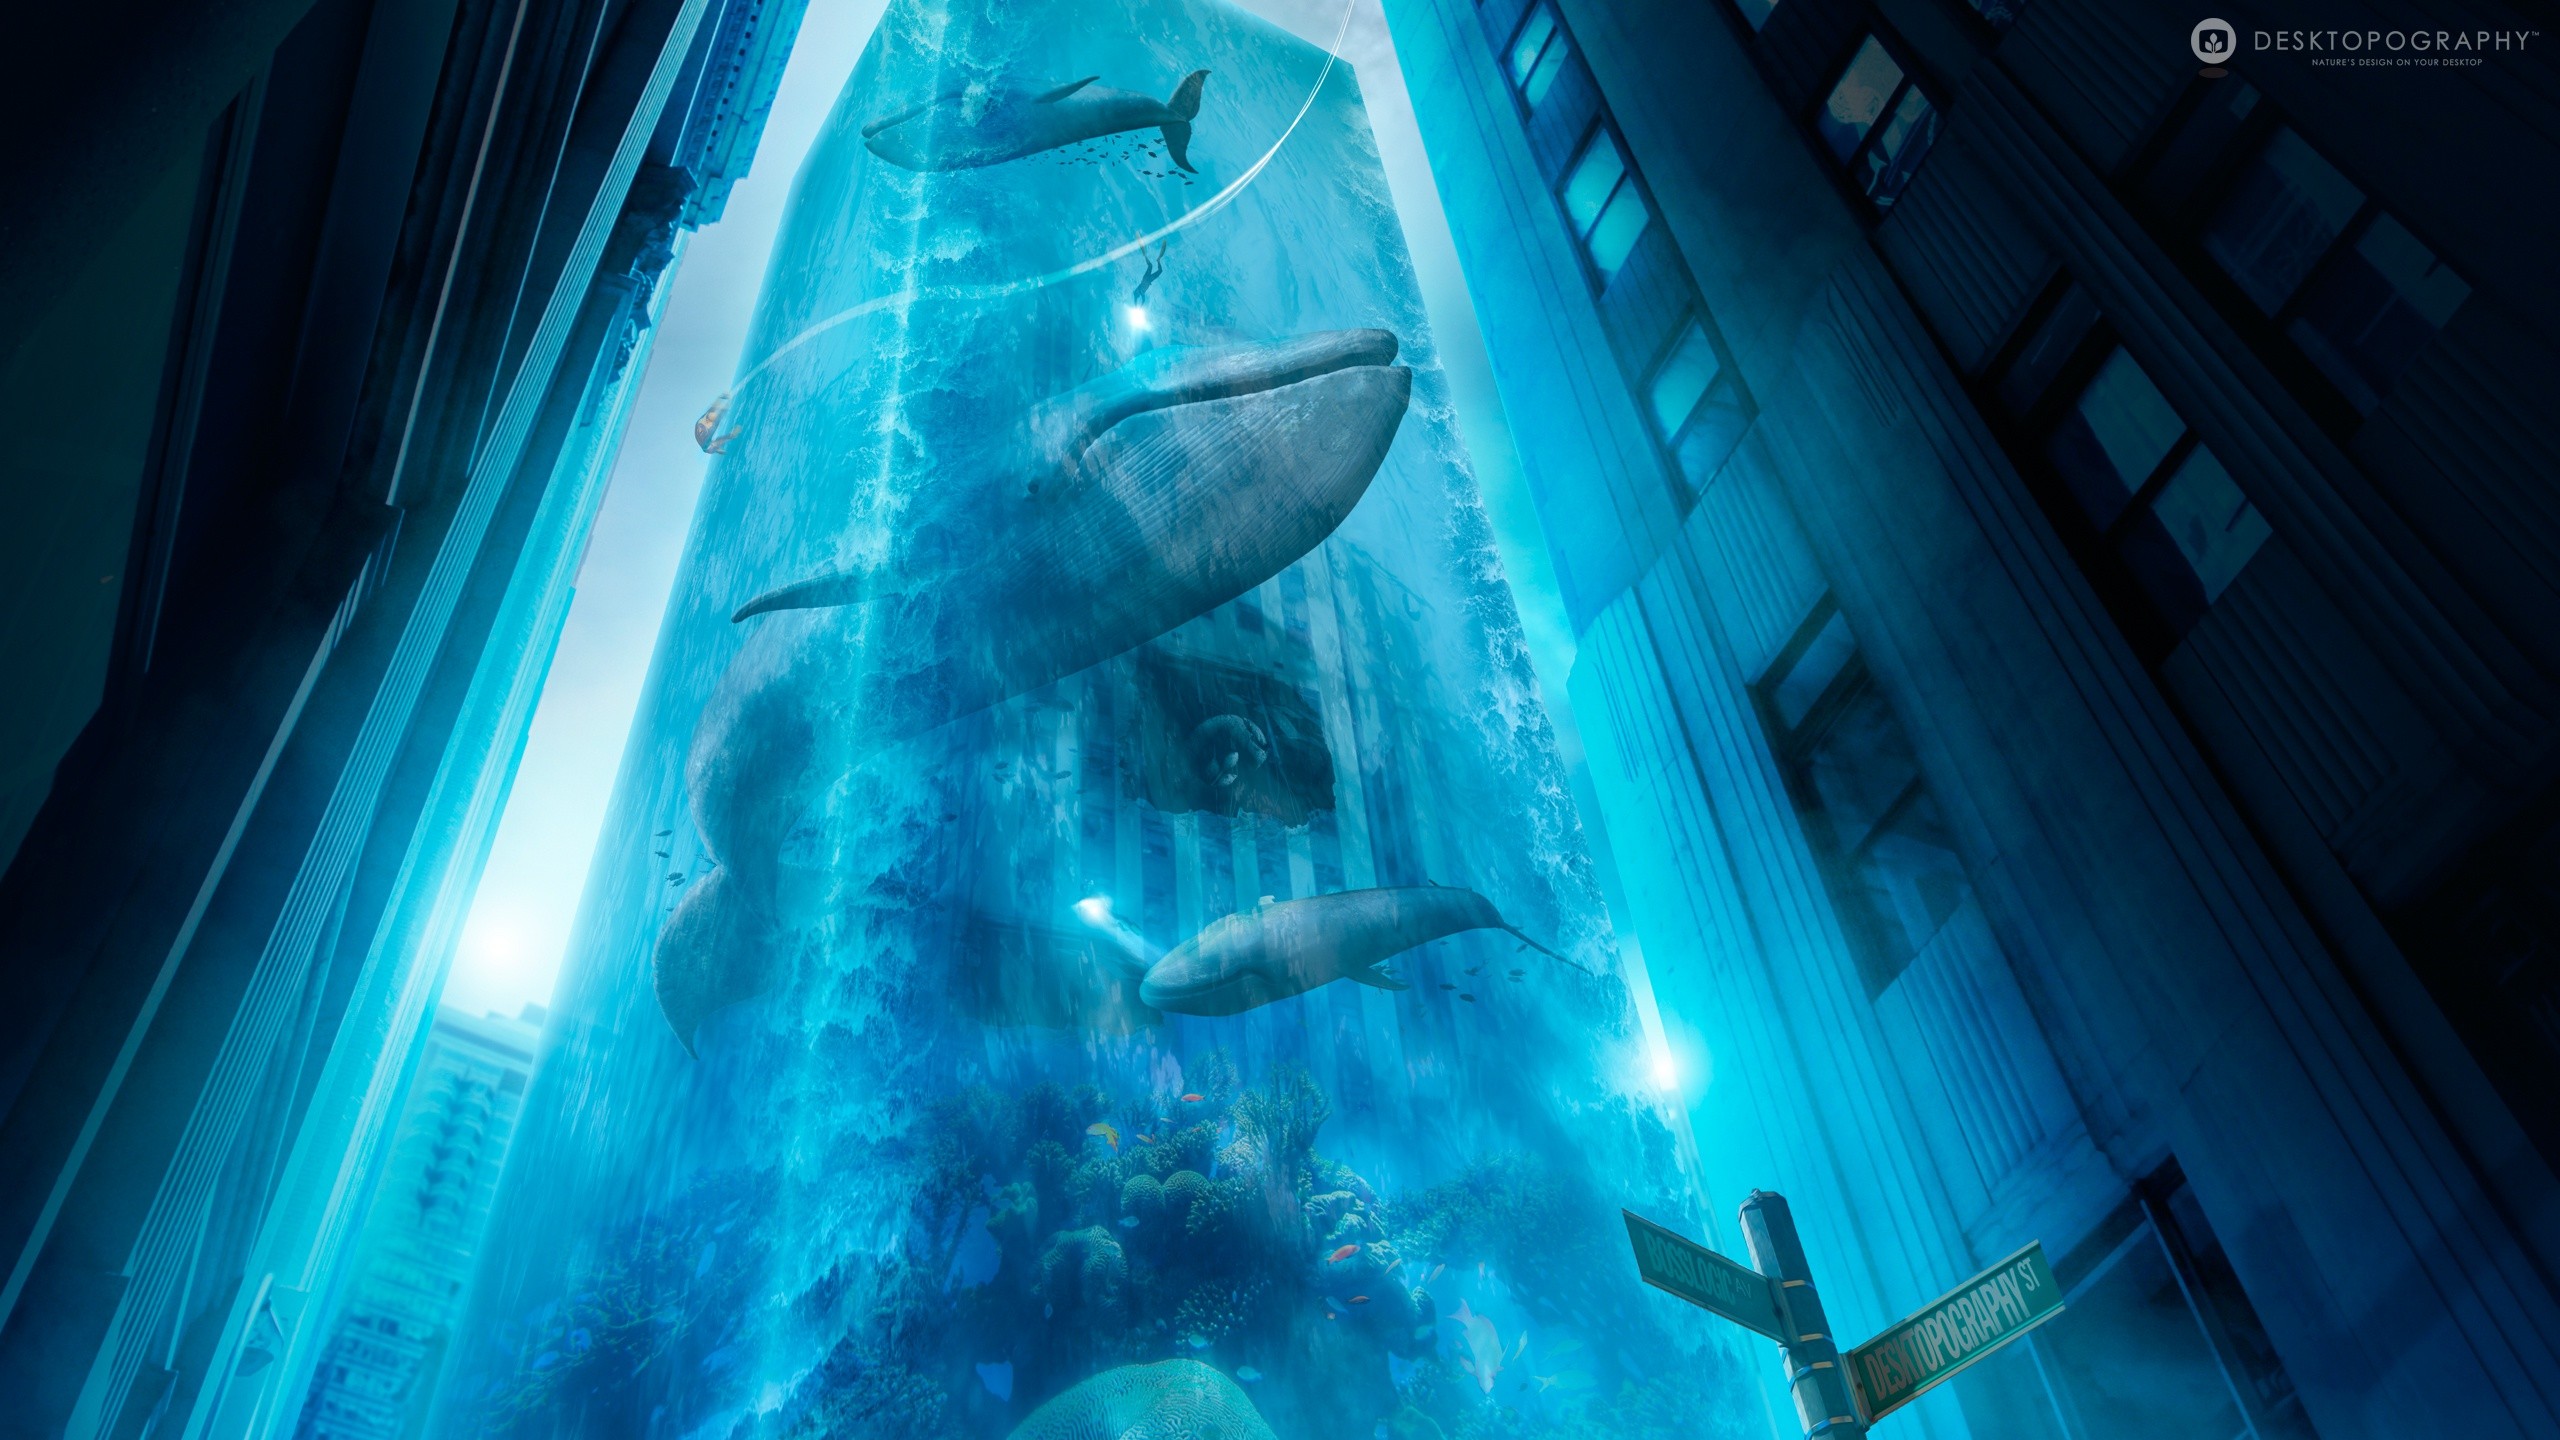 General 2560x1440 cyan blue animals city divers artwork whale mammals digital art Desktopography